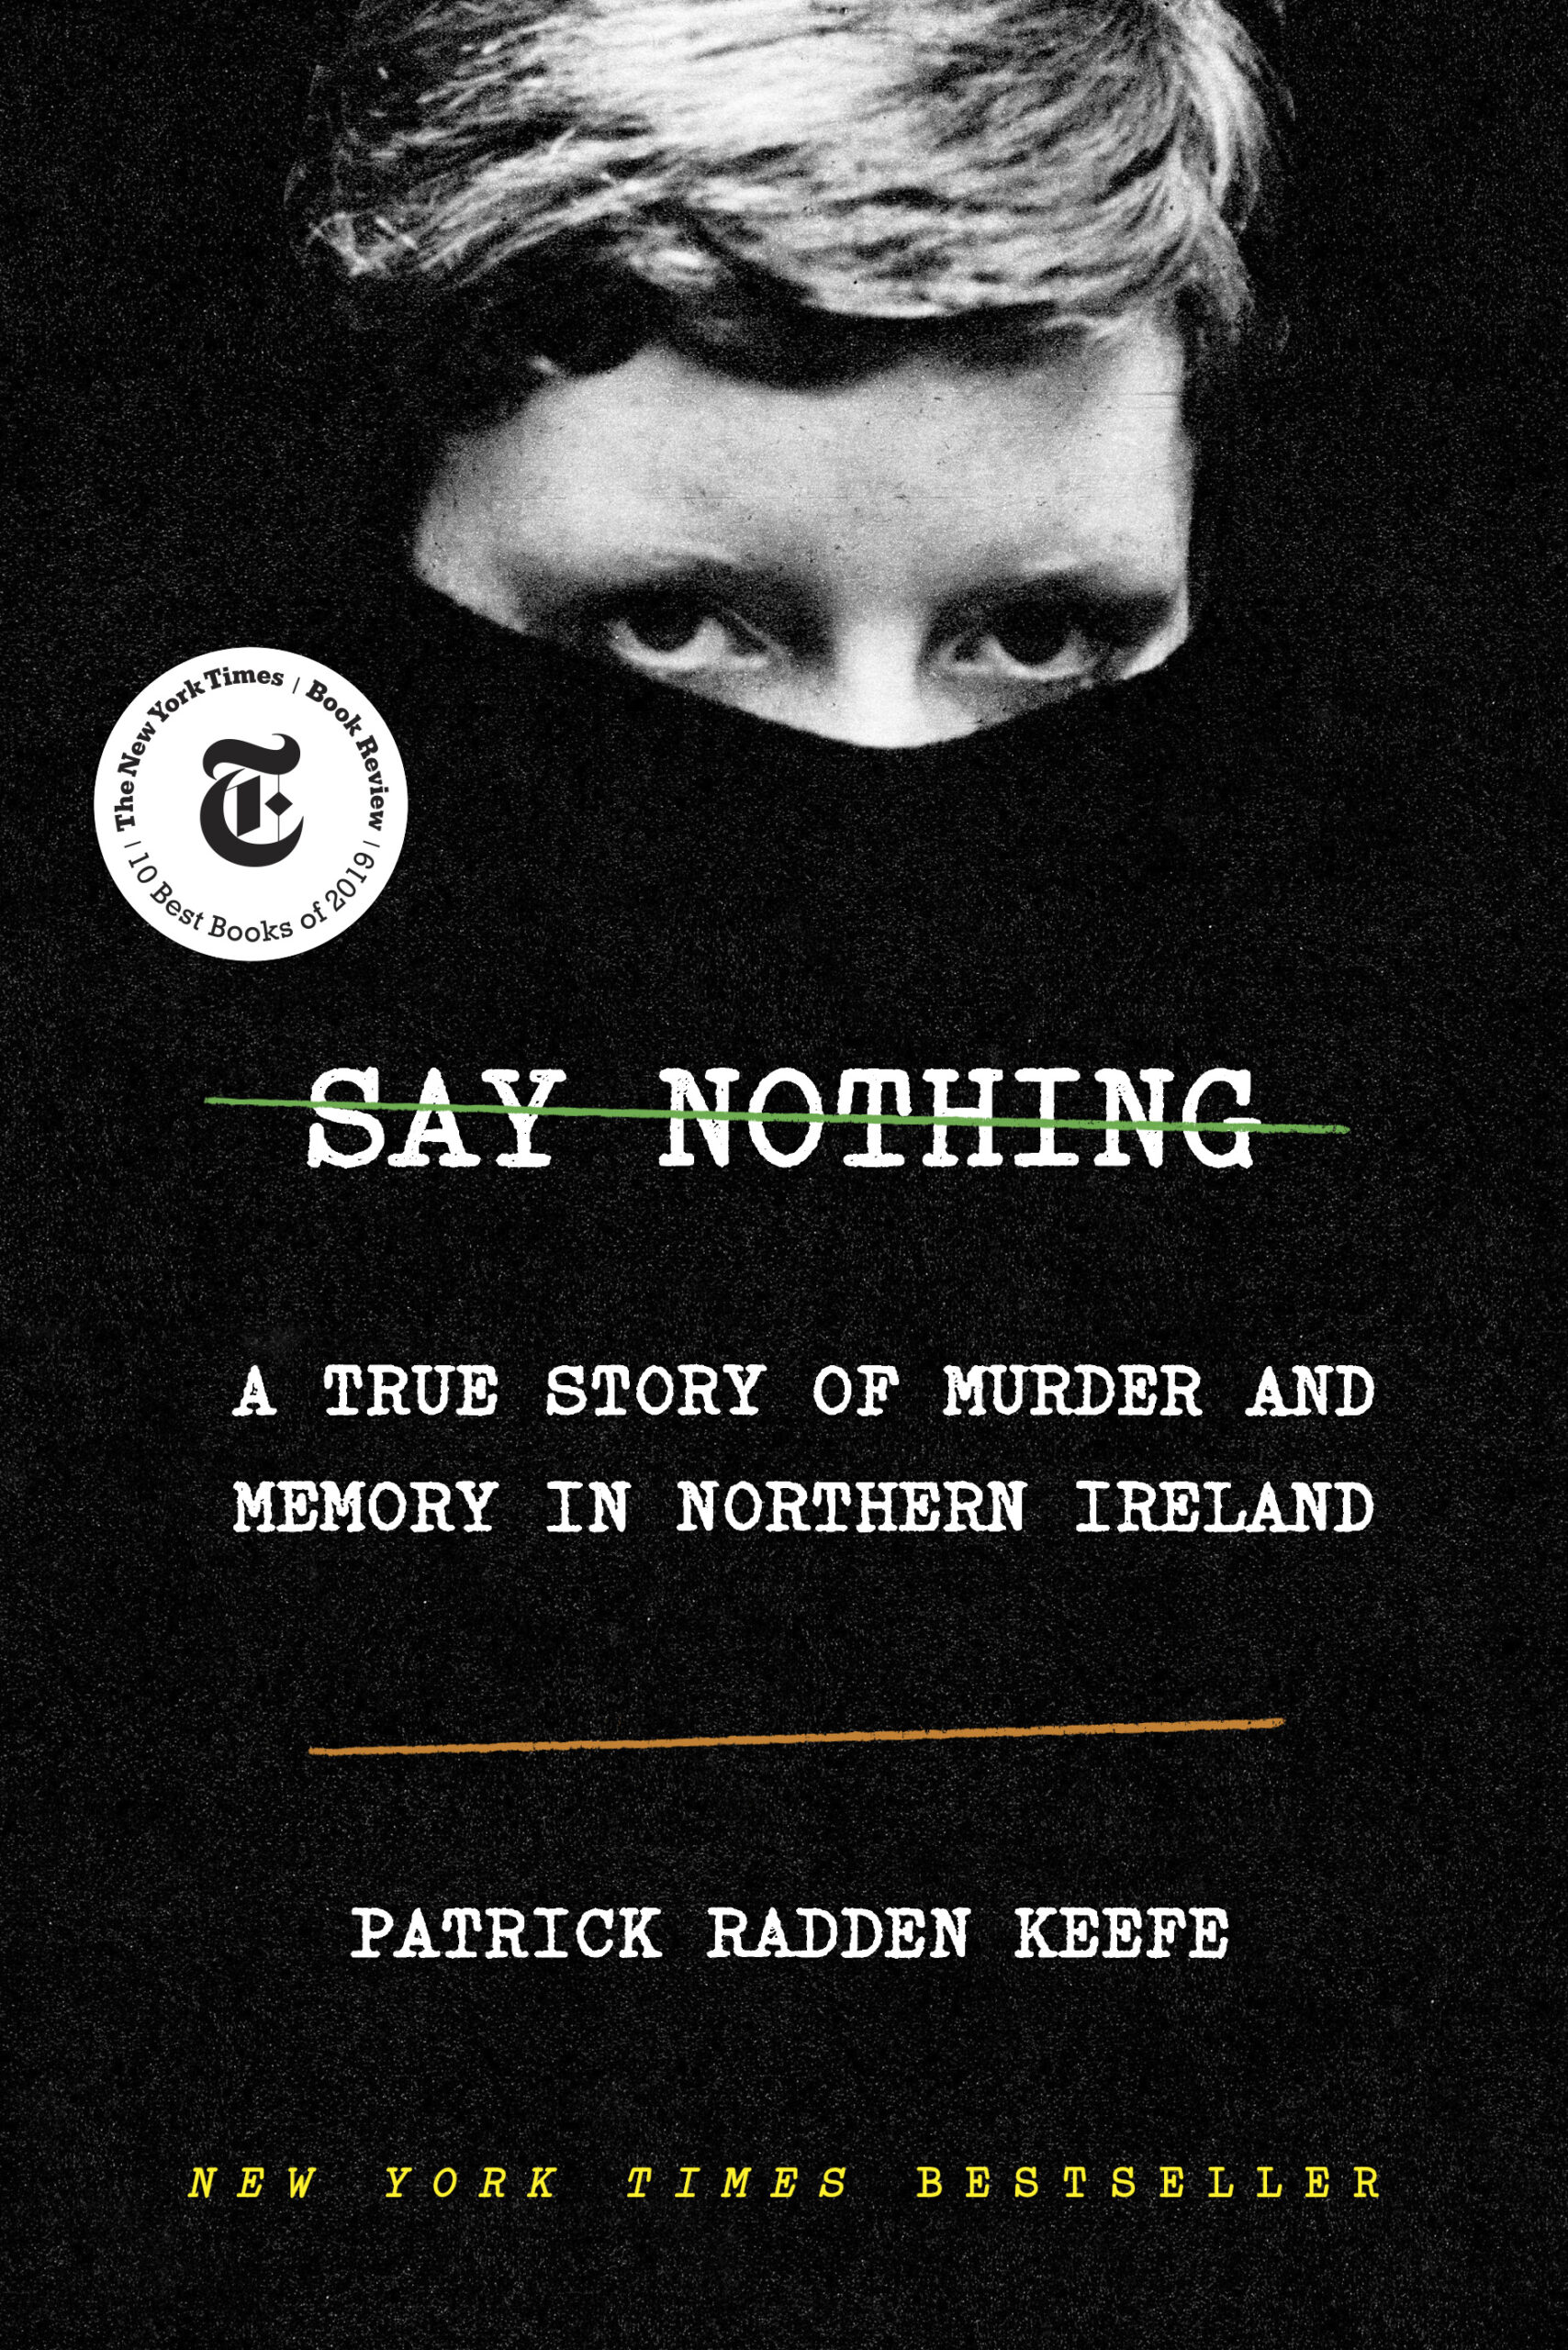 Radden Keefe, Patrick - Say Nothing